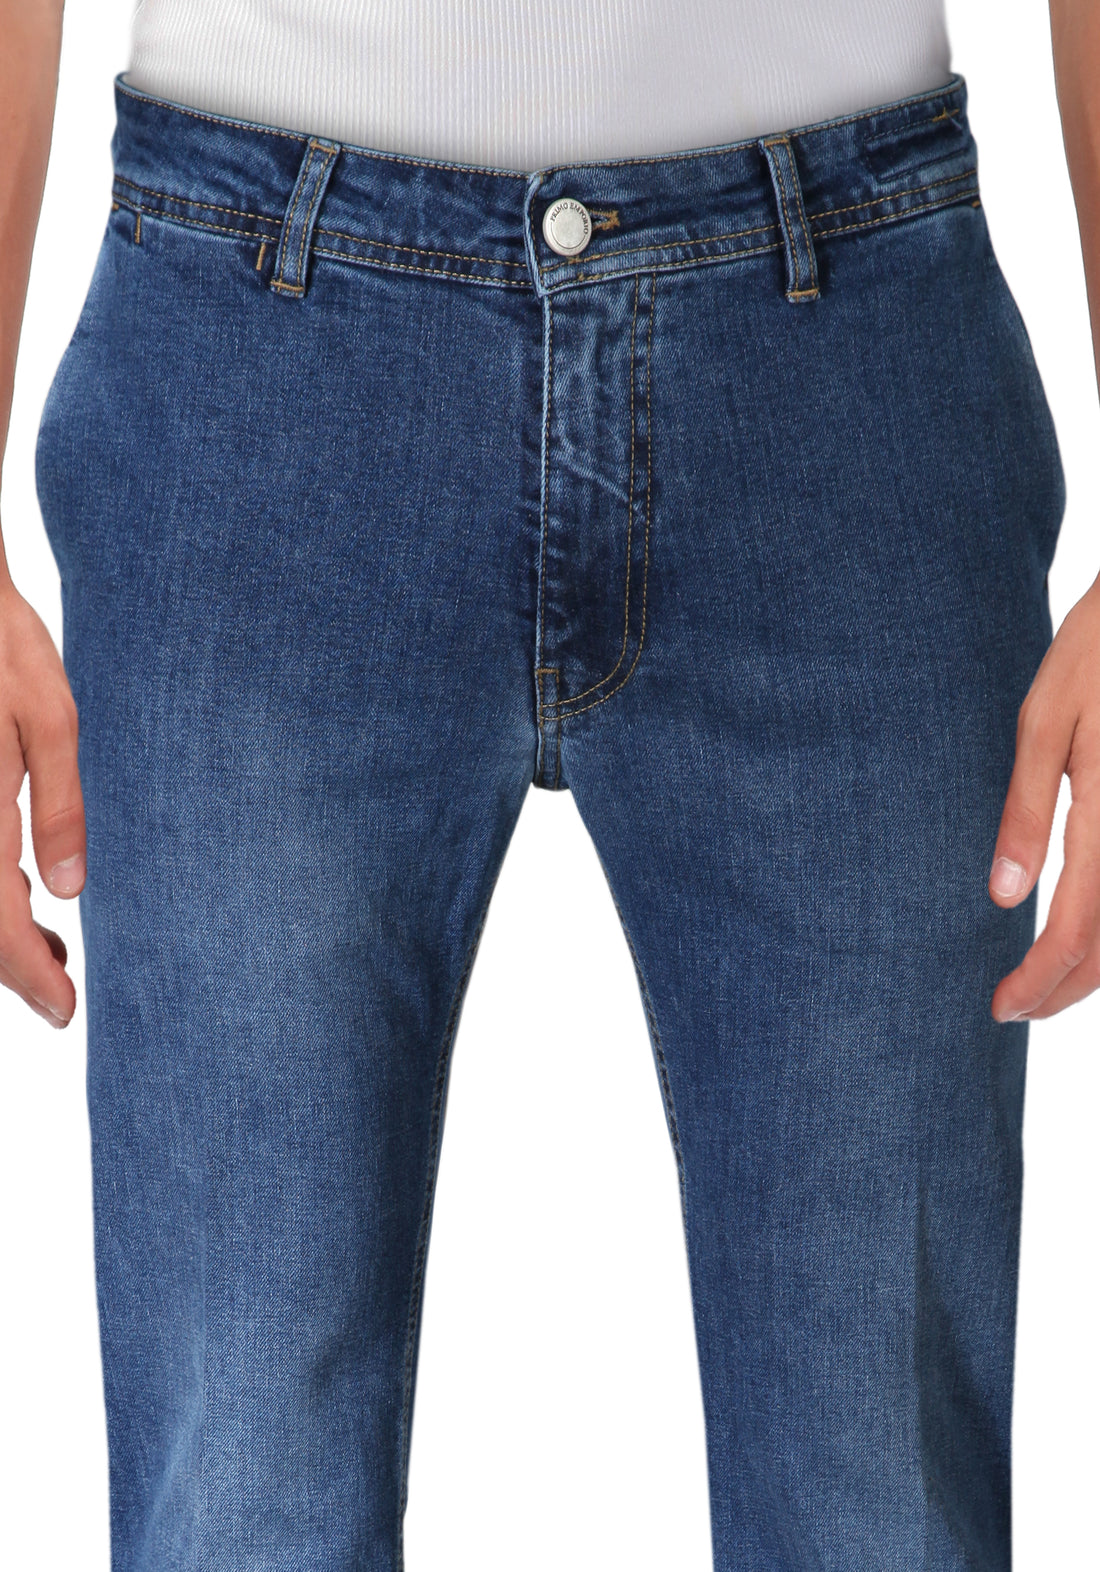 America Pocket Jeans